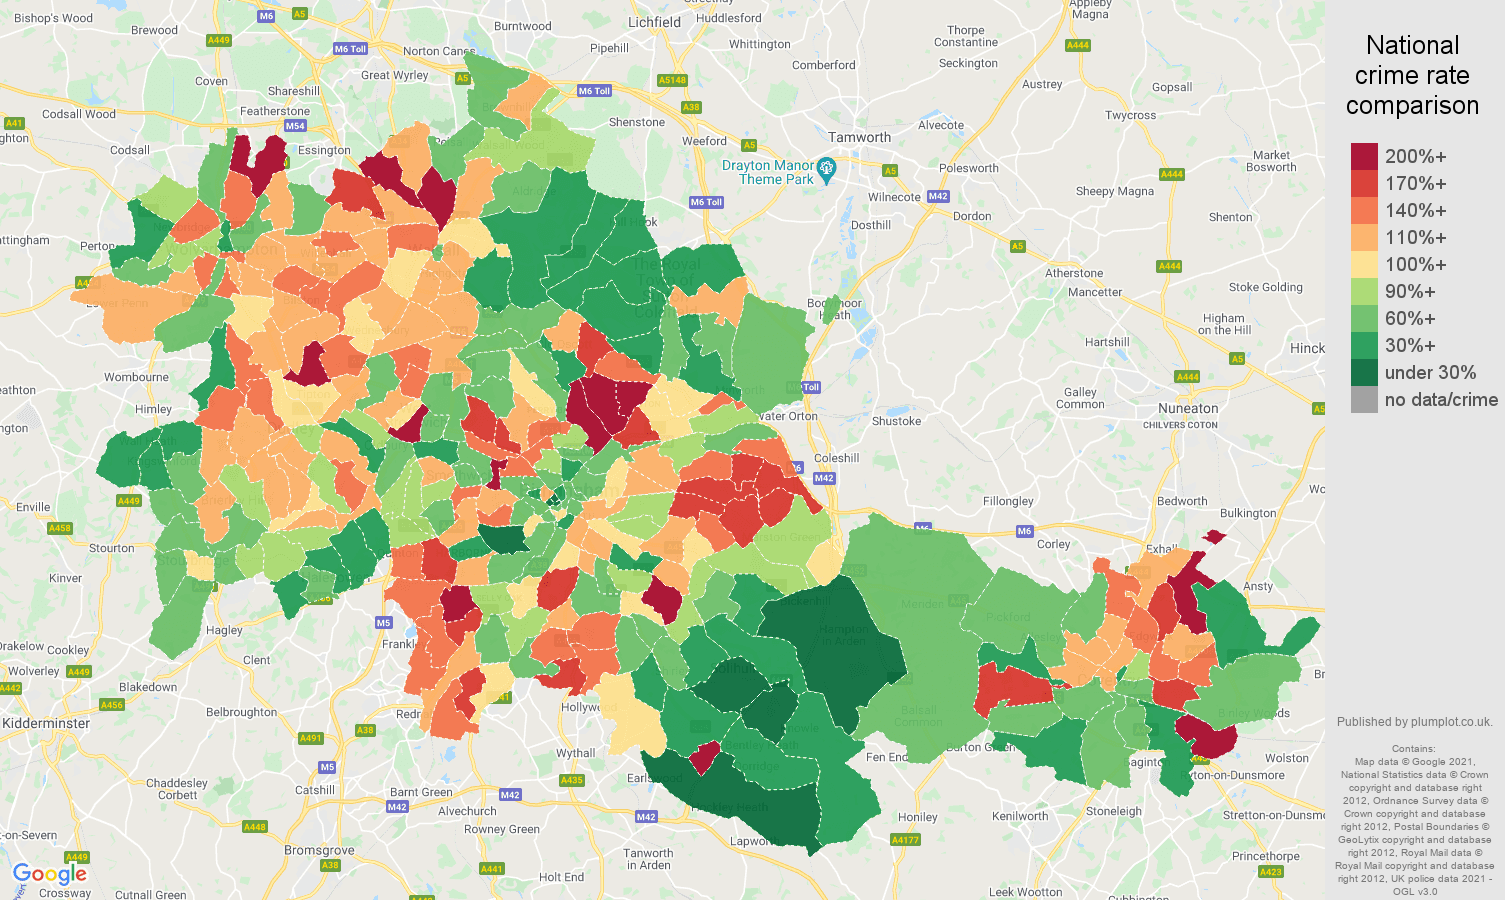 West Midlands county criminal damage and arson crime rate comparison map